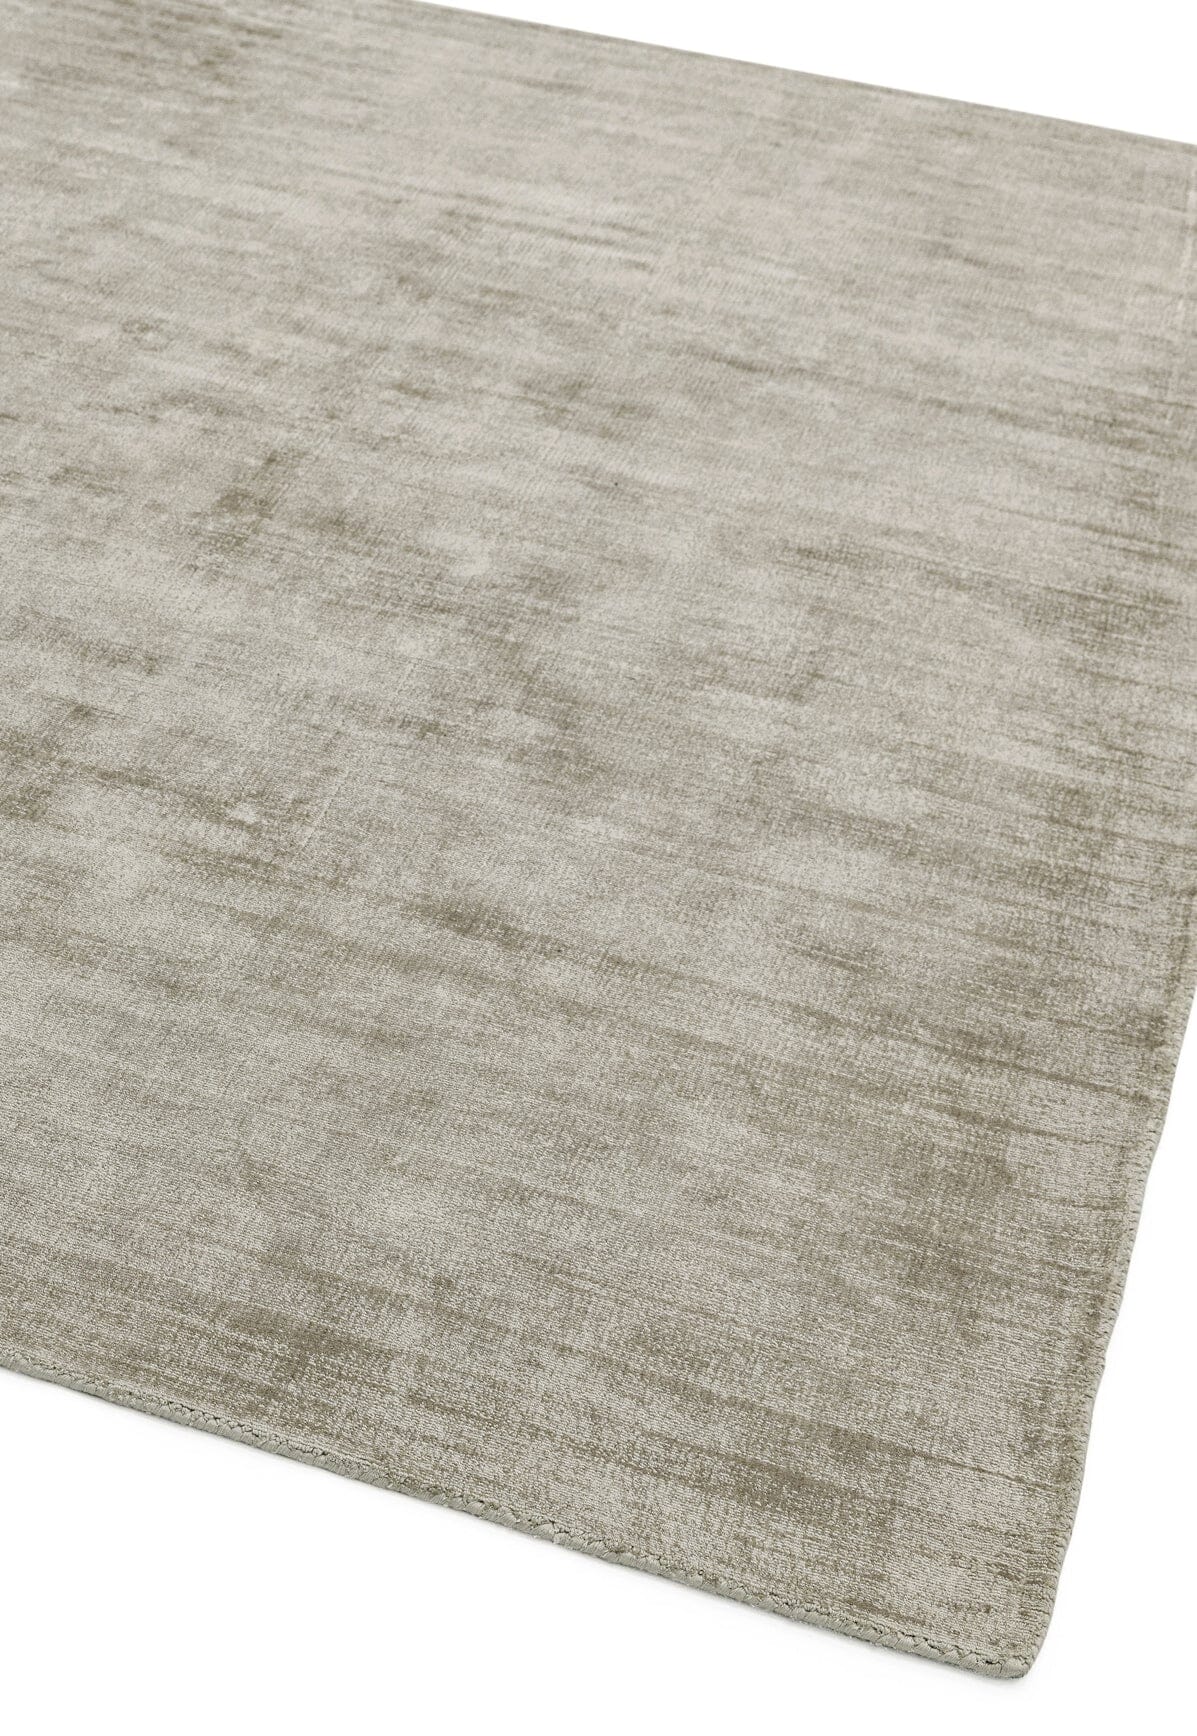 Asiatic Carpets Blade Hand Woven Runner Smoke - 66 x 240cm